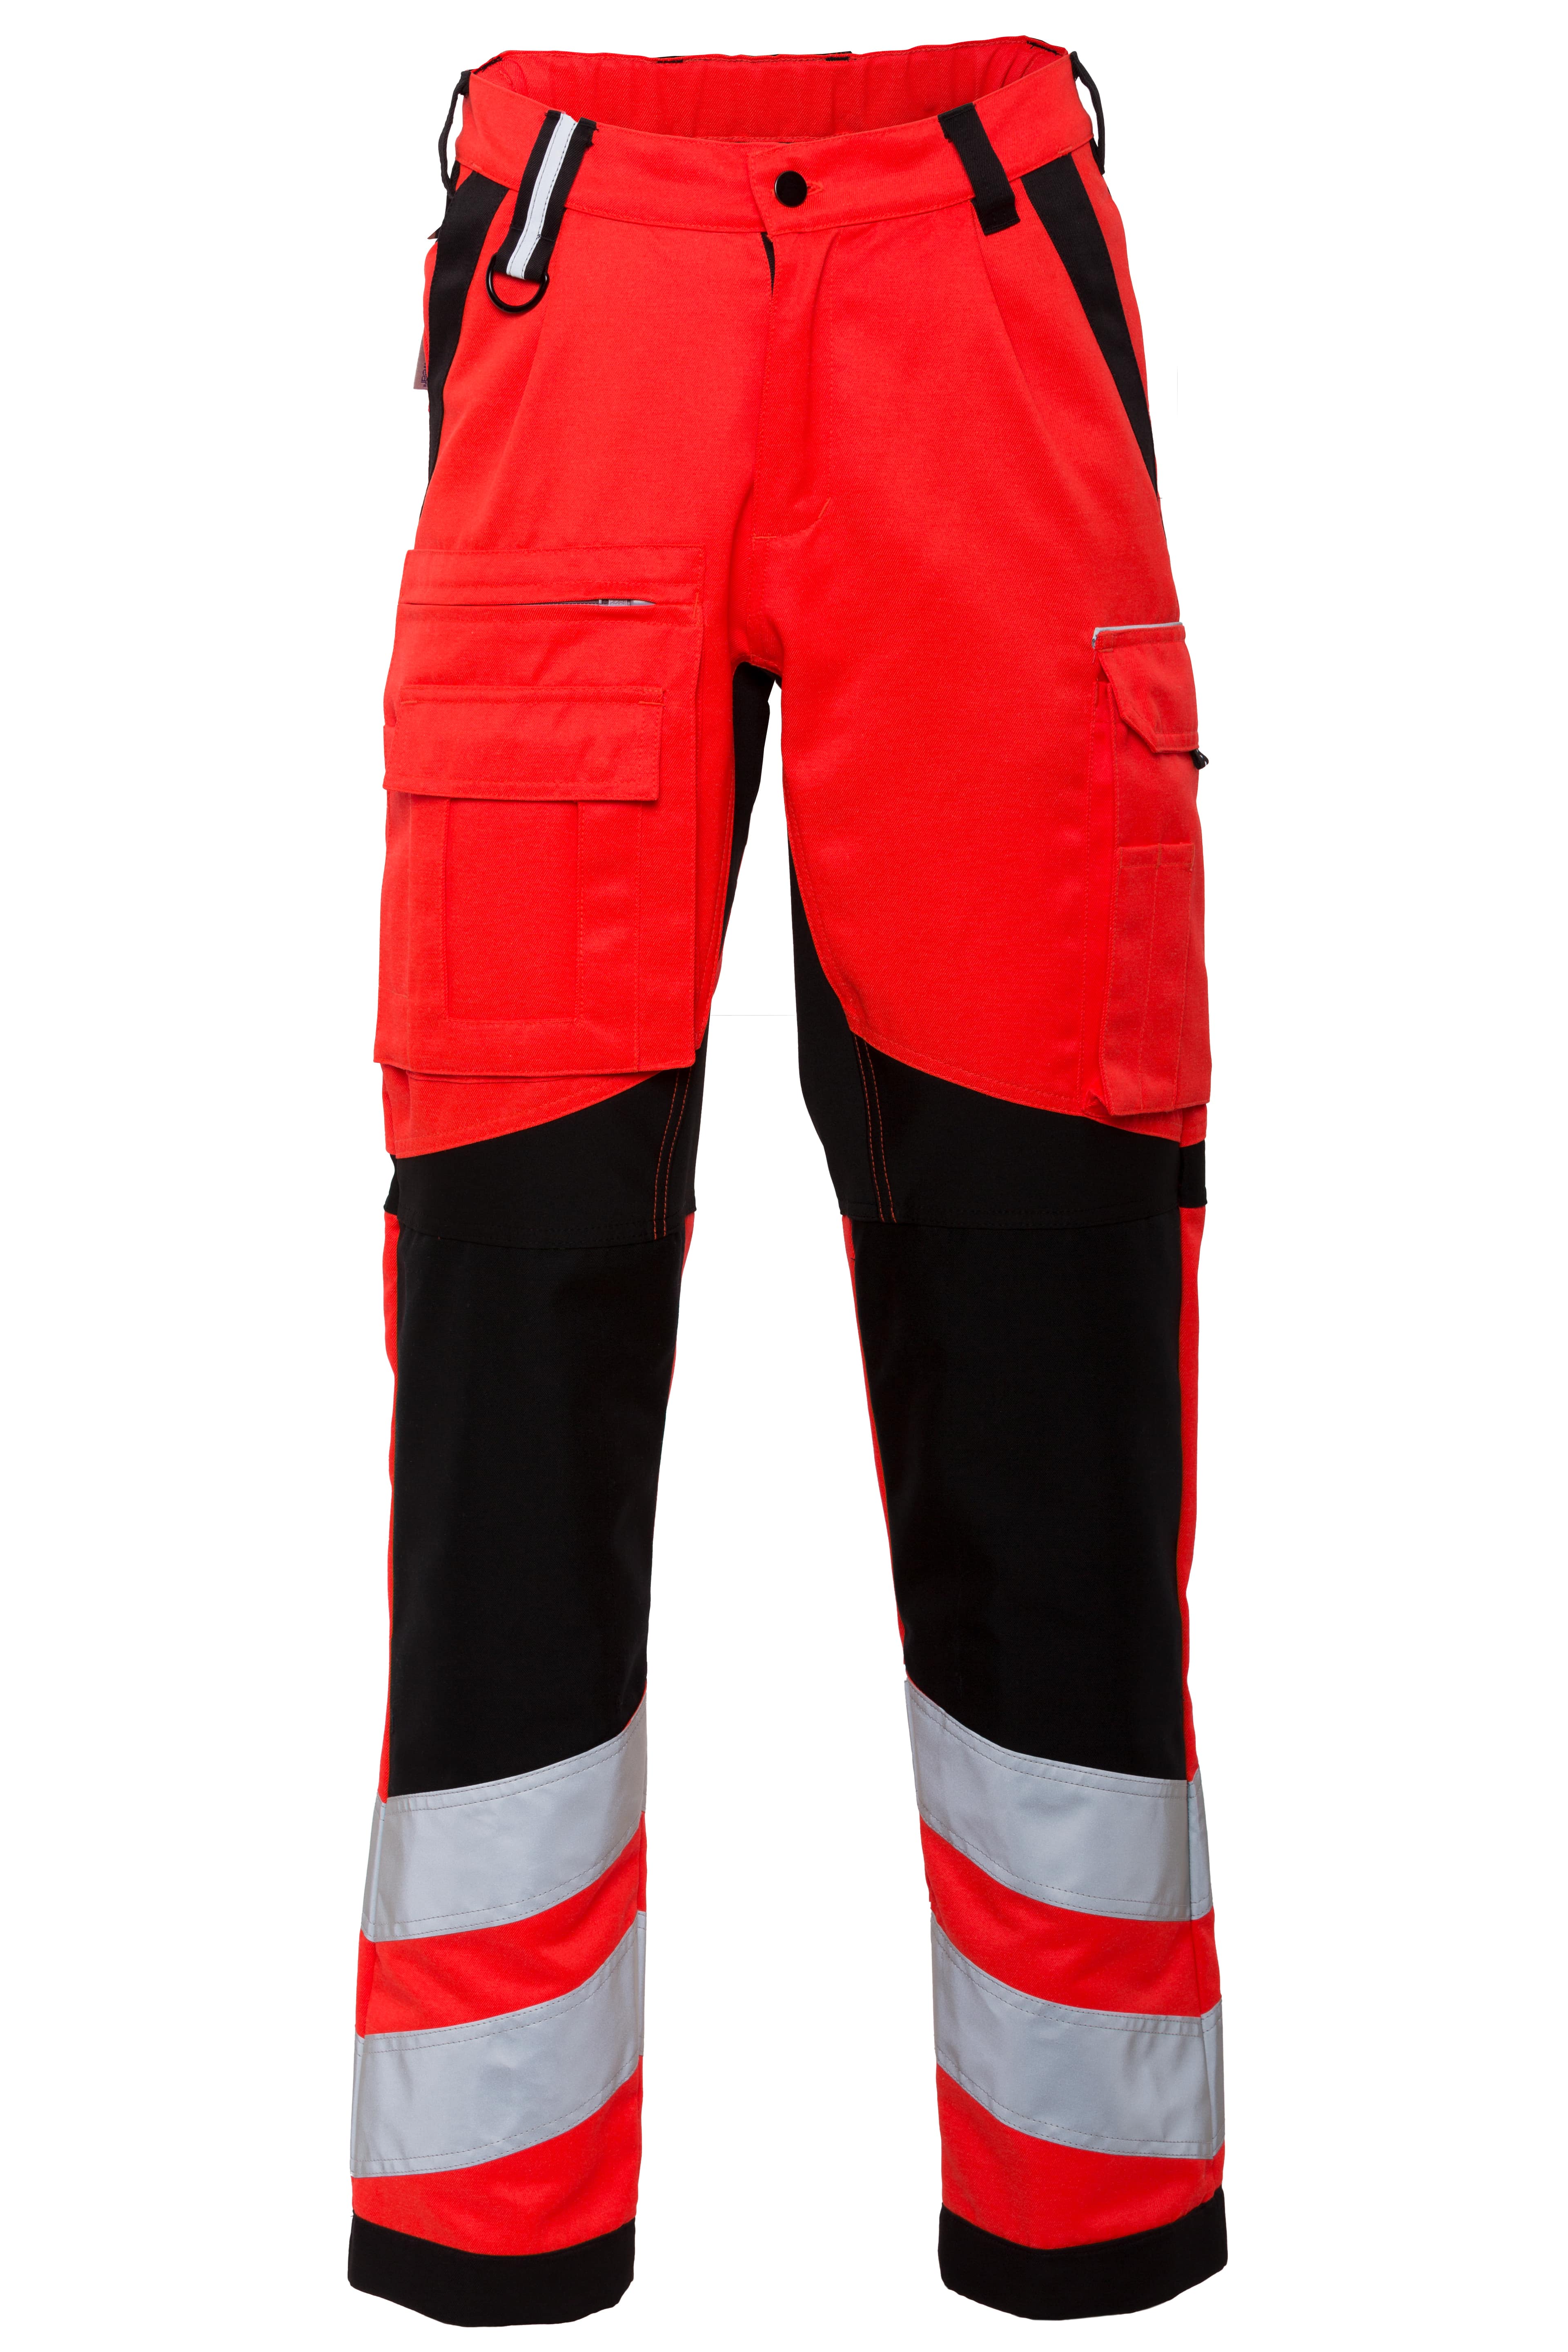 Rescuewear Unisex Hose Stretch HiVis Klasse 2 Neon Rot / Schwarz - 25